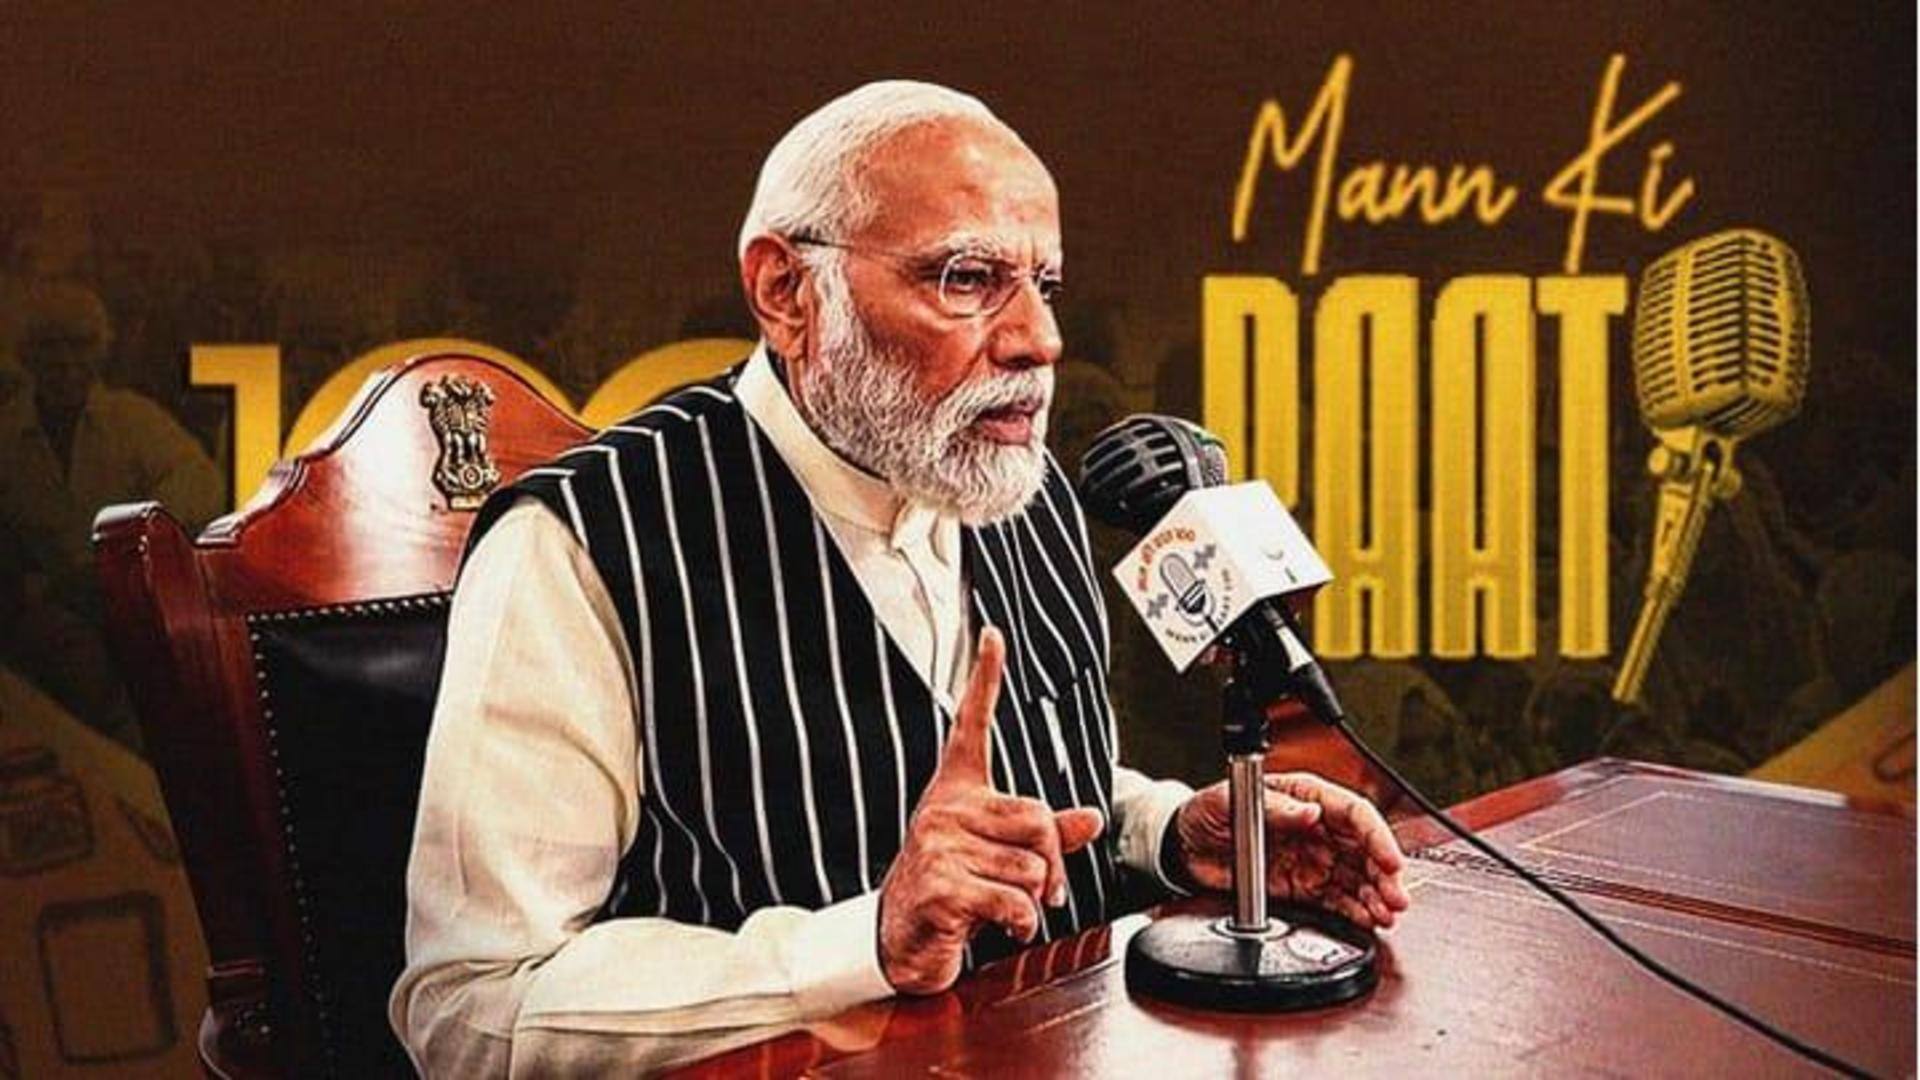 Mann ki Baat 100th Episode: ప్రజలతో కనెక్ట్ అవడానికి 'మన్ కీ బాత్' నాకు మార్గాన్ని చూపింది: ప్రధాని మోదీ 